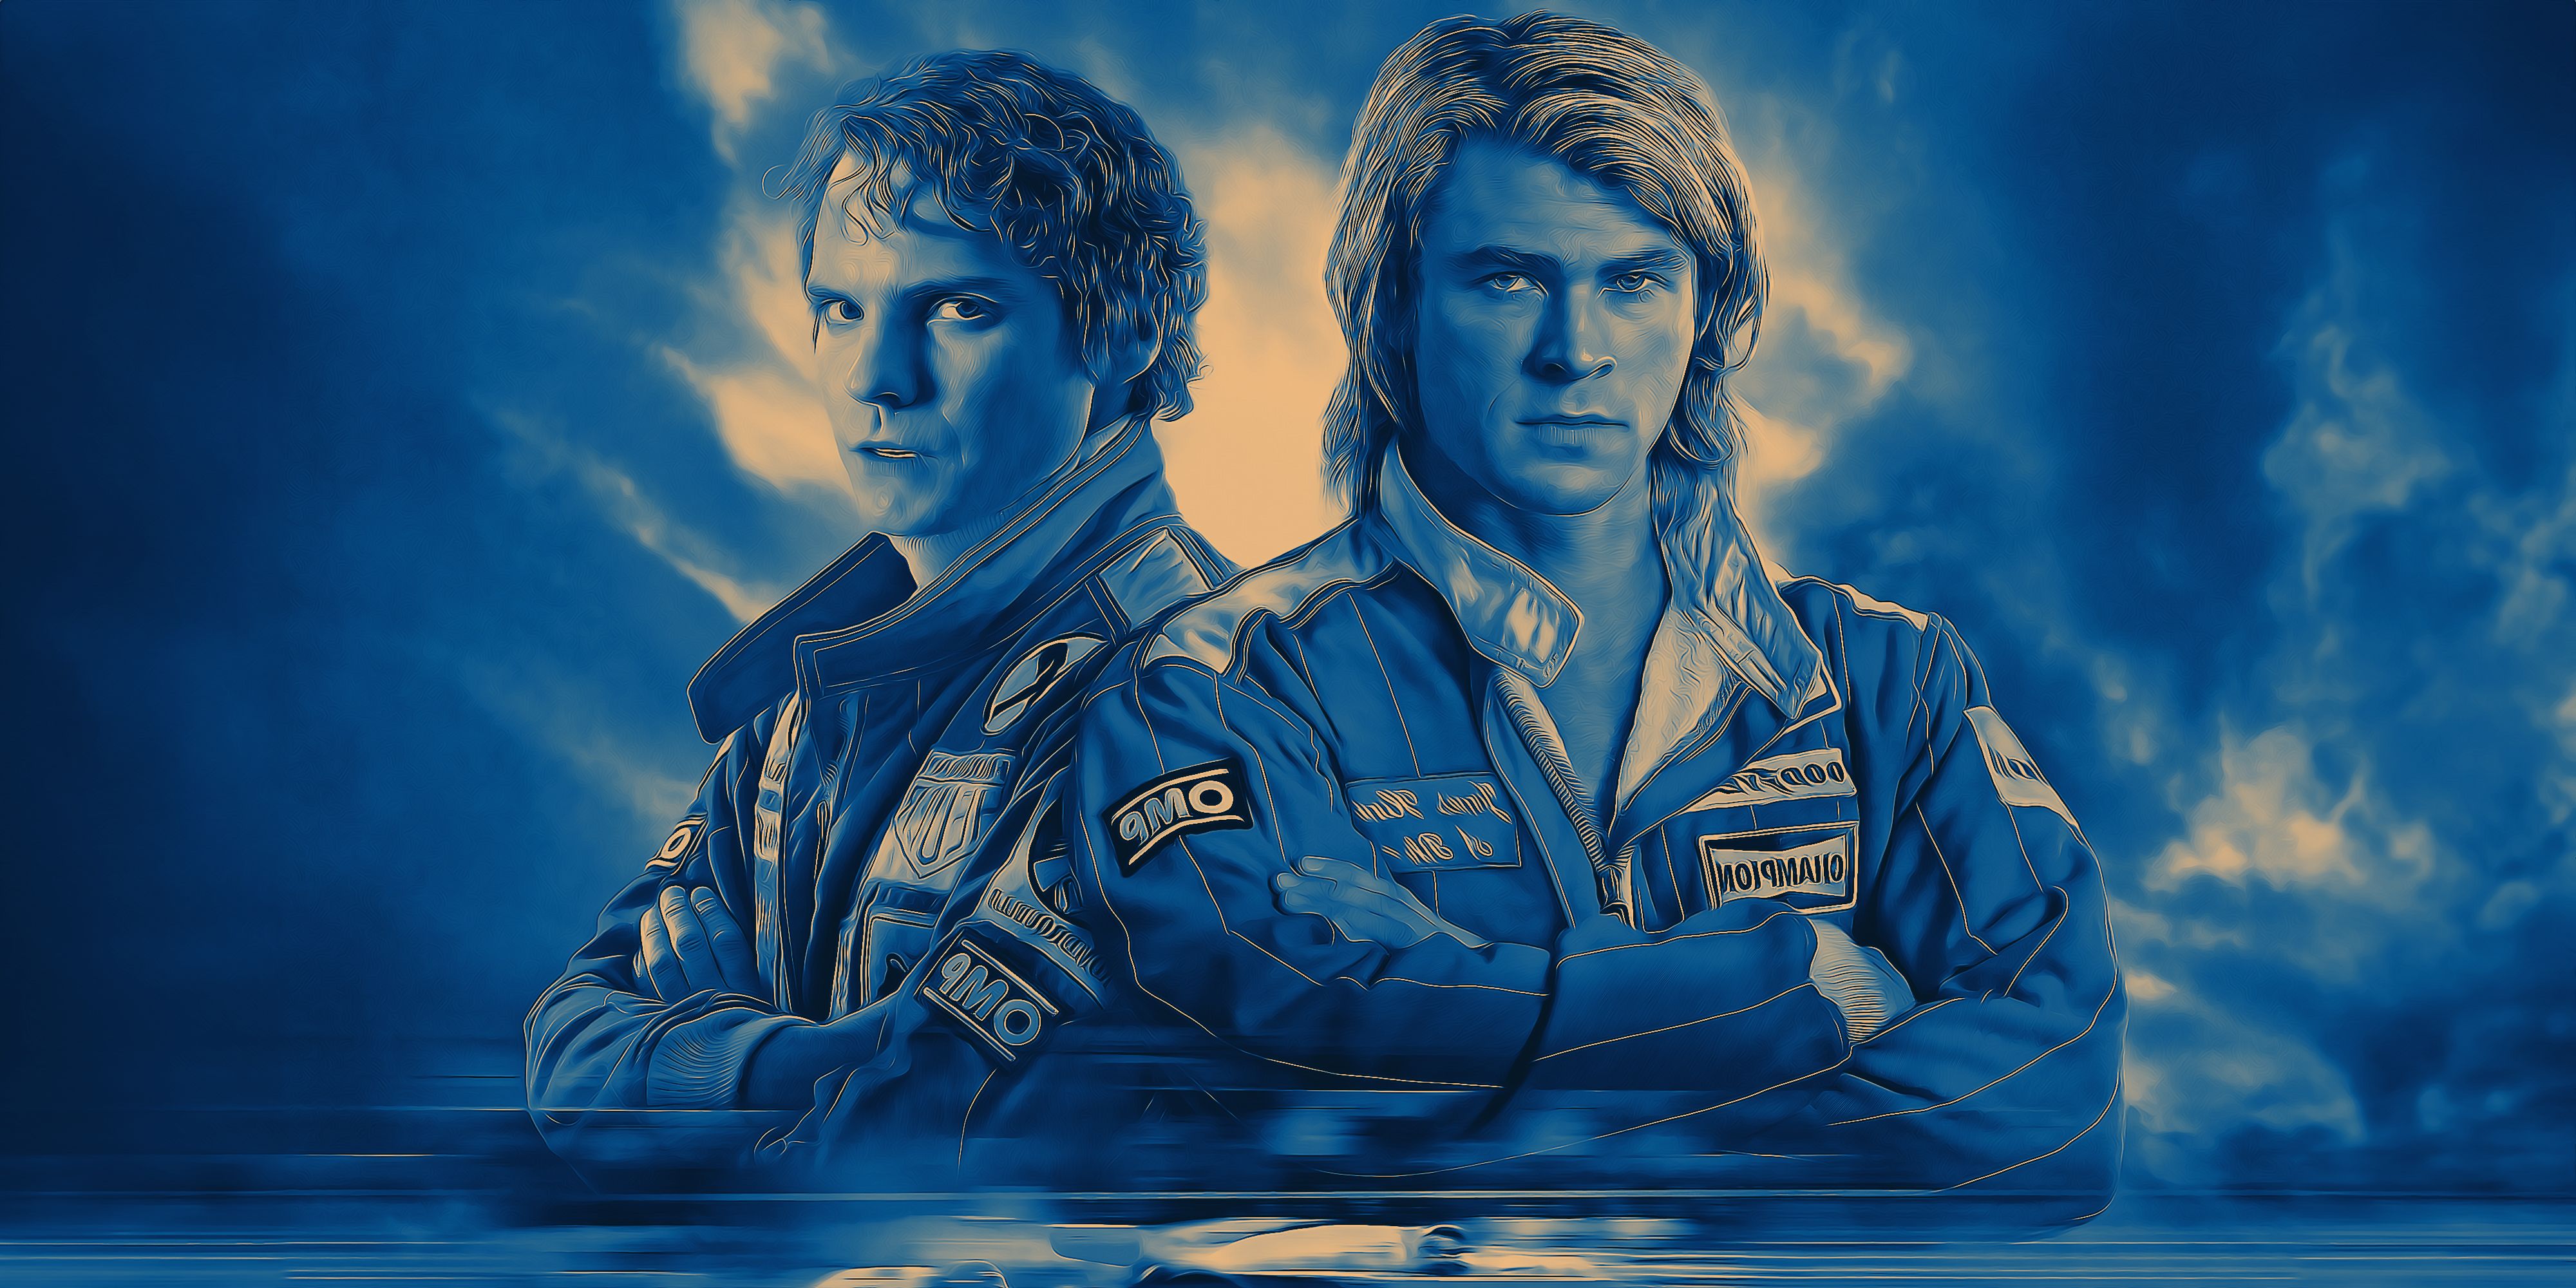 An edited image of Rush (2013) promo poster, starring Daniel Bruhl and Chris Hemsworth